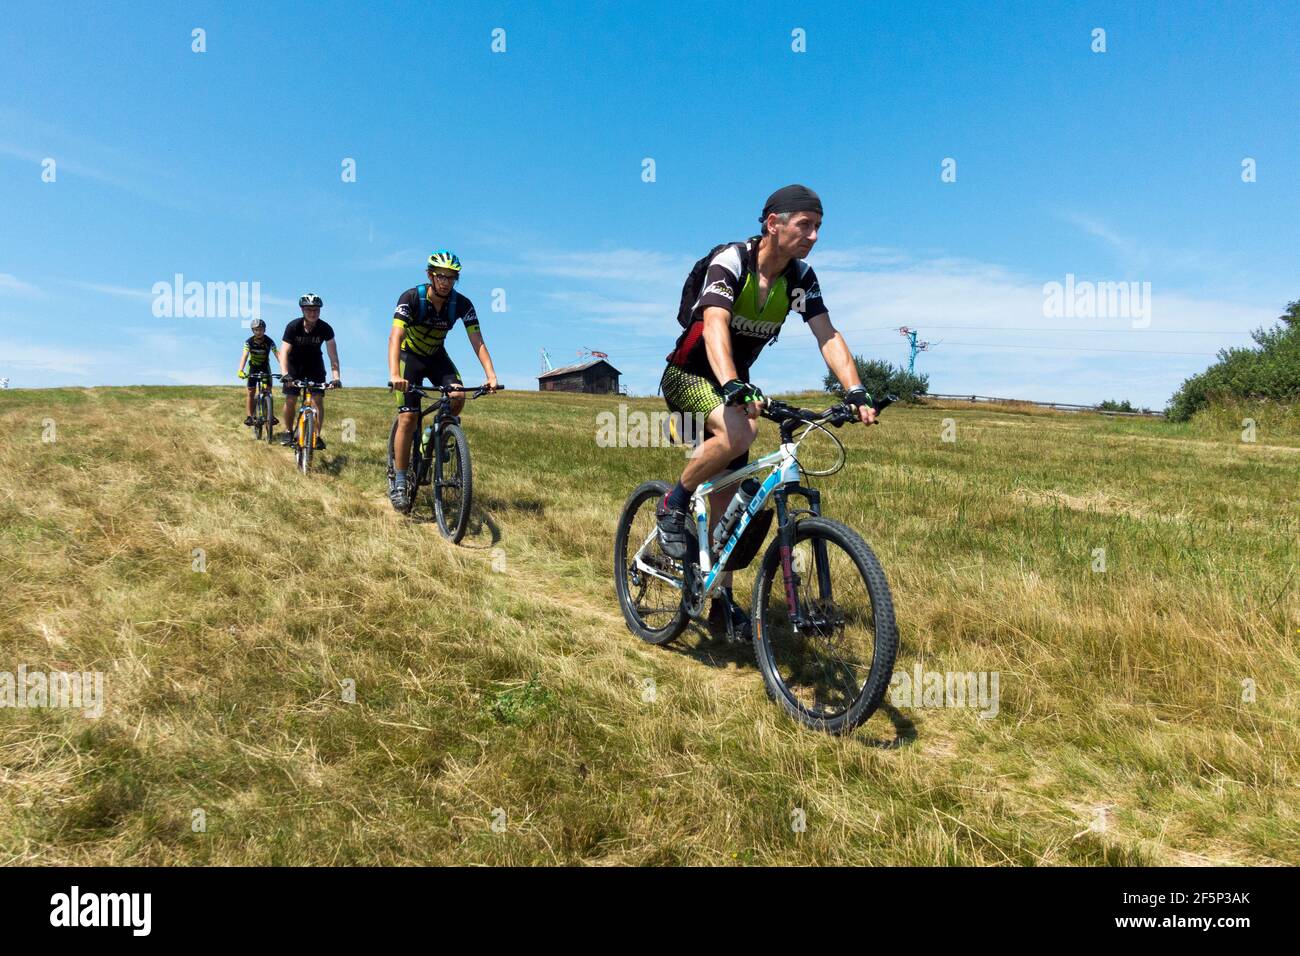 Four men ride a mountain bike and enjoying a sunny day, active lifestyle Stock Photo